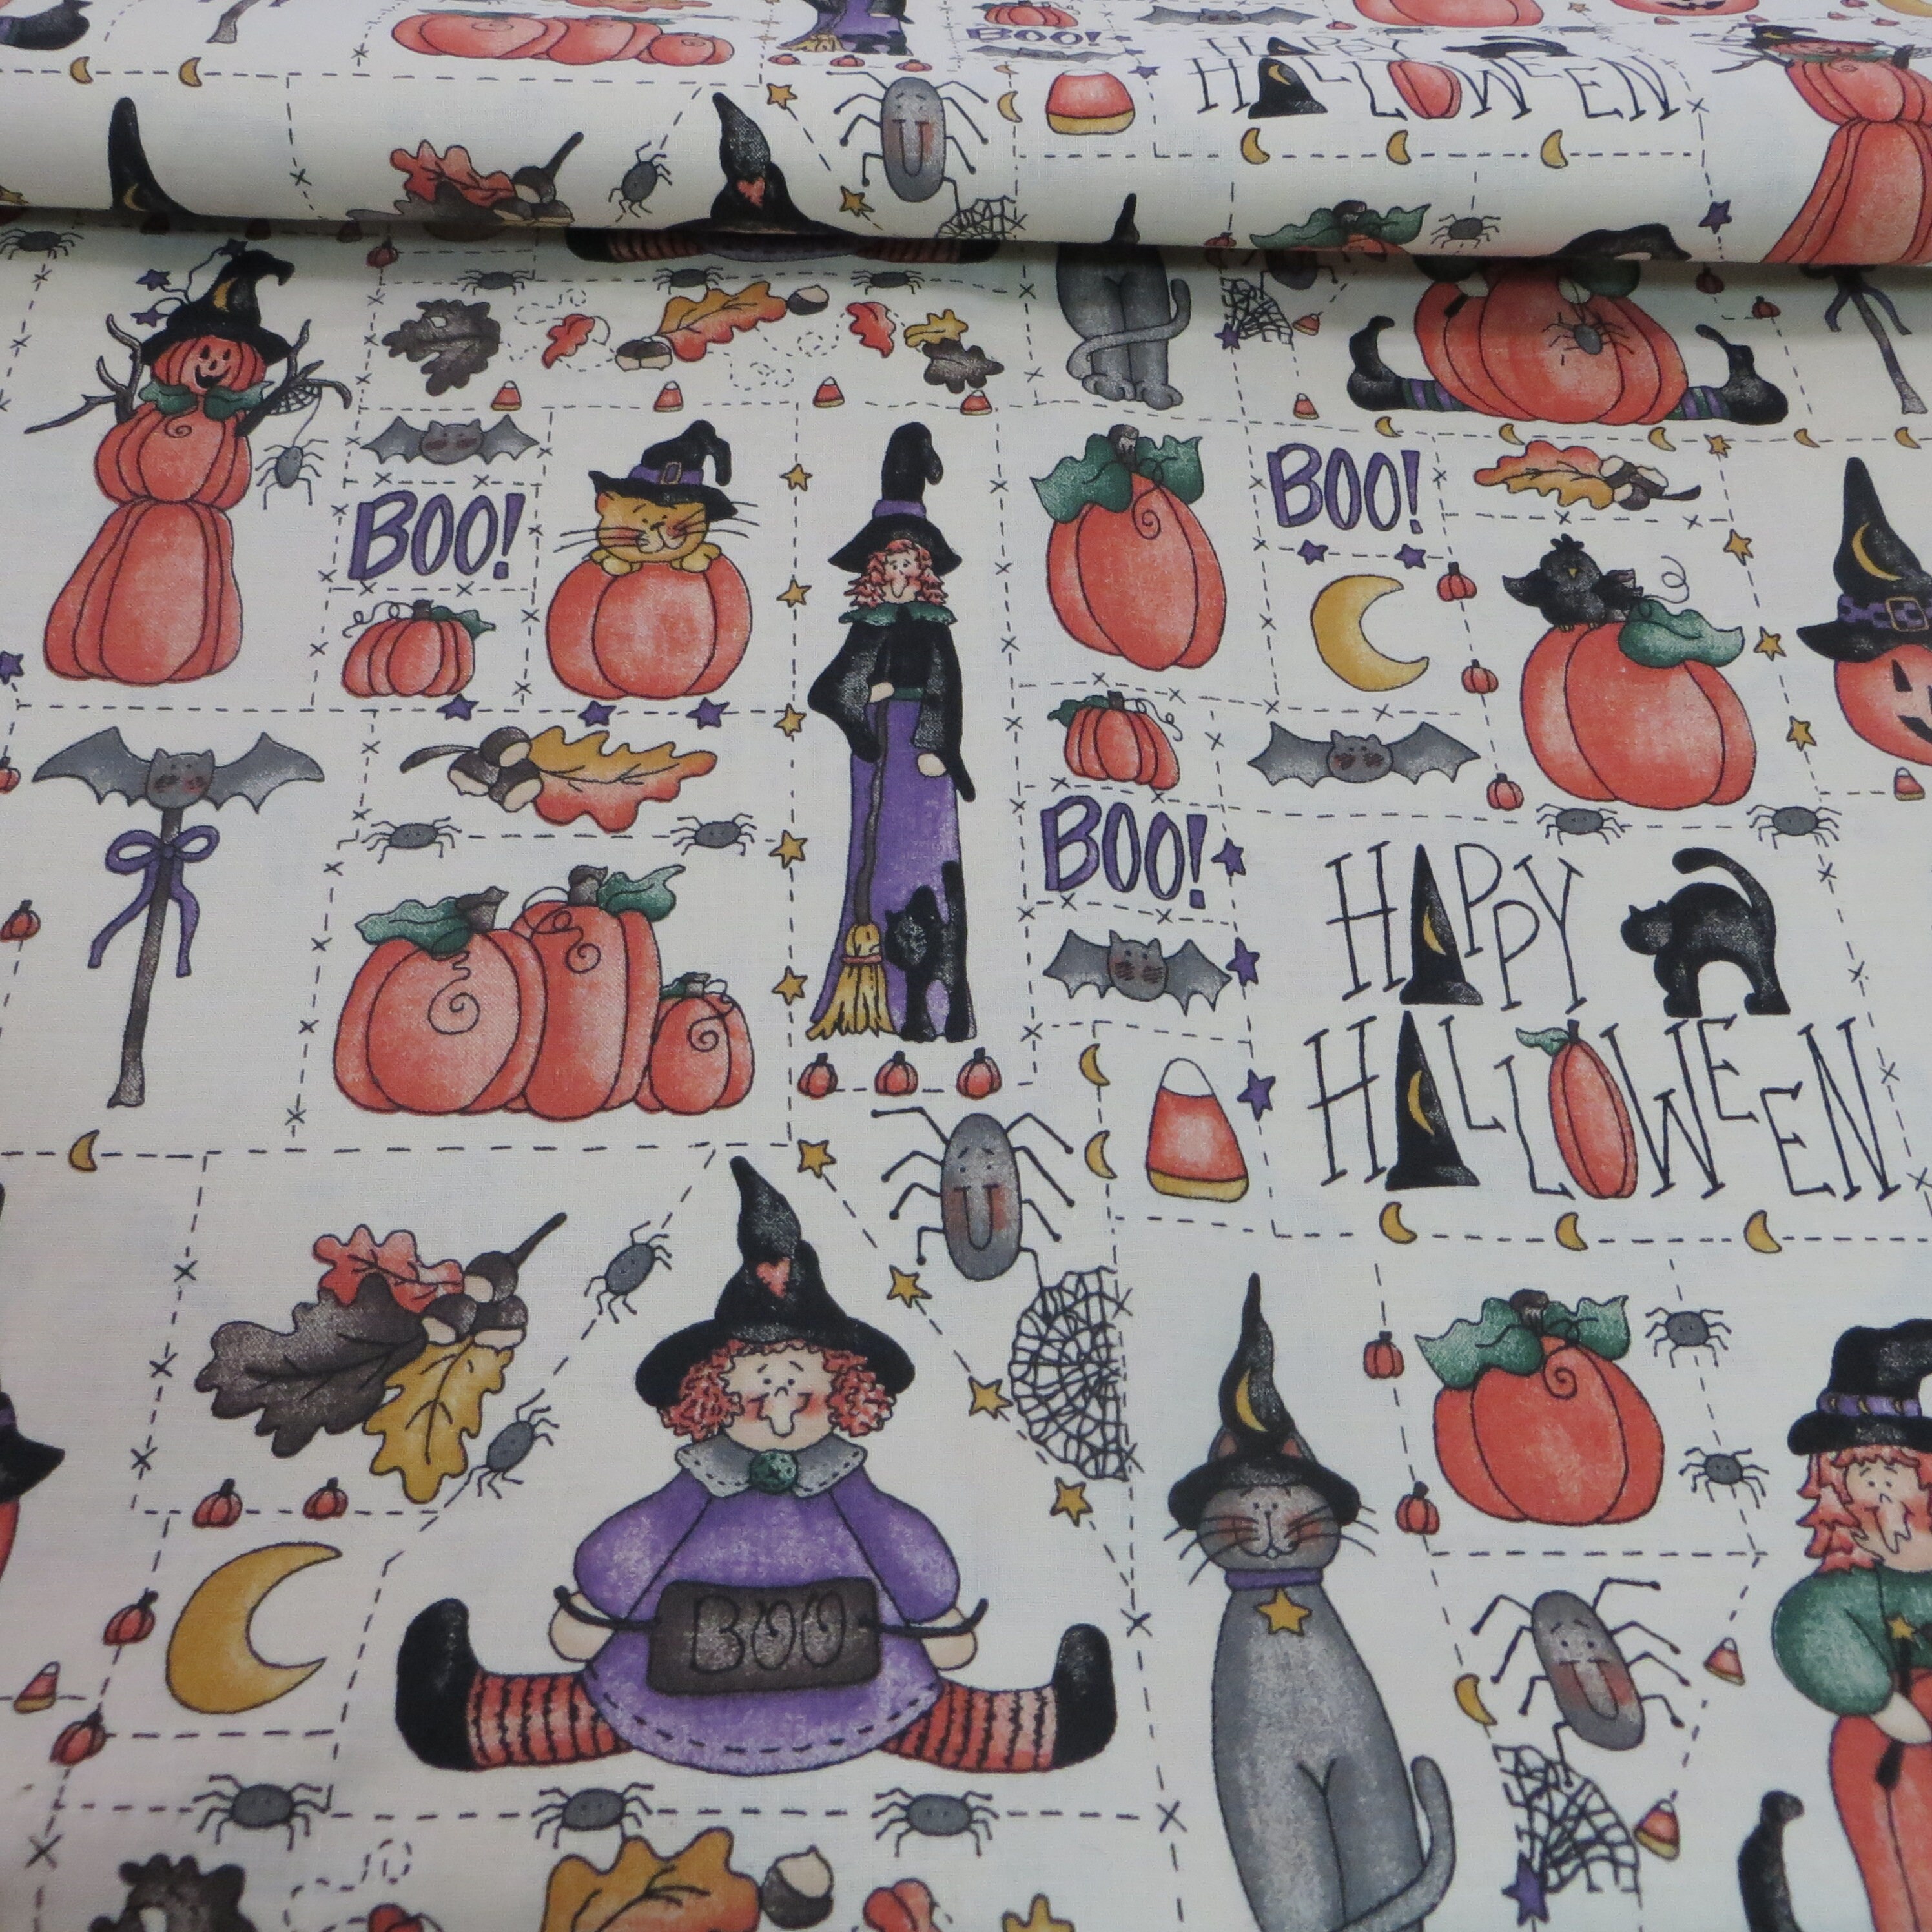 Omgeving Geniet Calamiteit Halloween Fabric Halloween Material Dianna Marcum for Marcus - Etsy